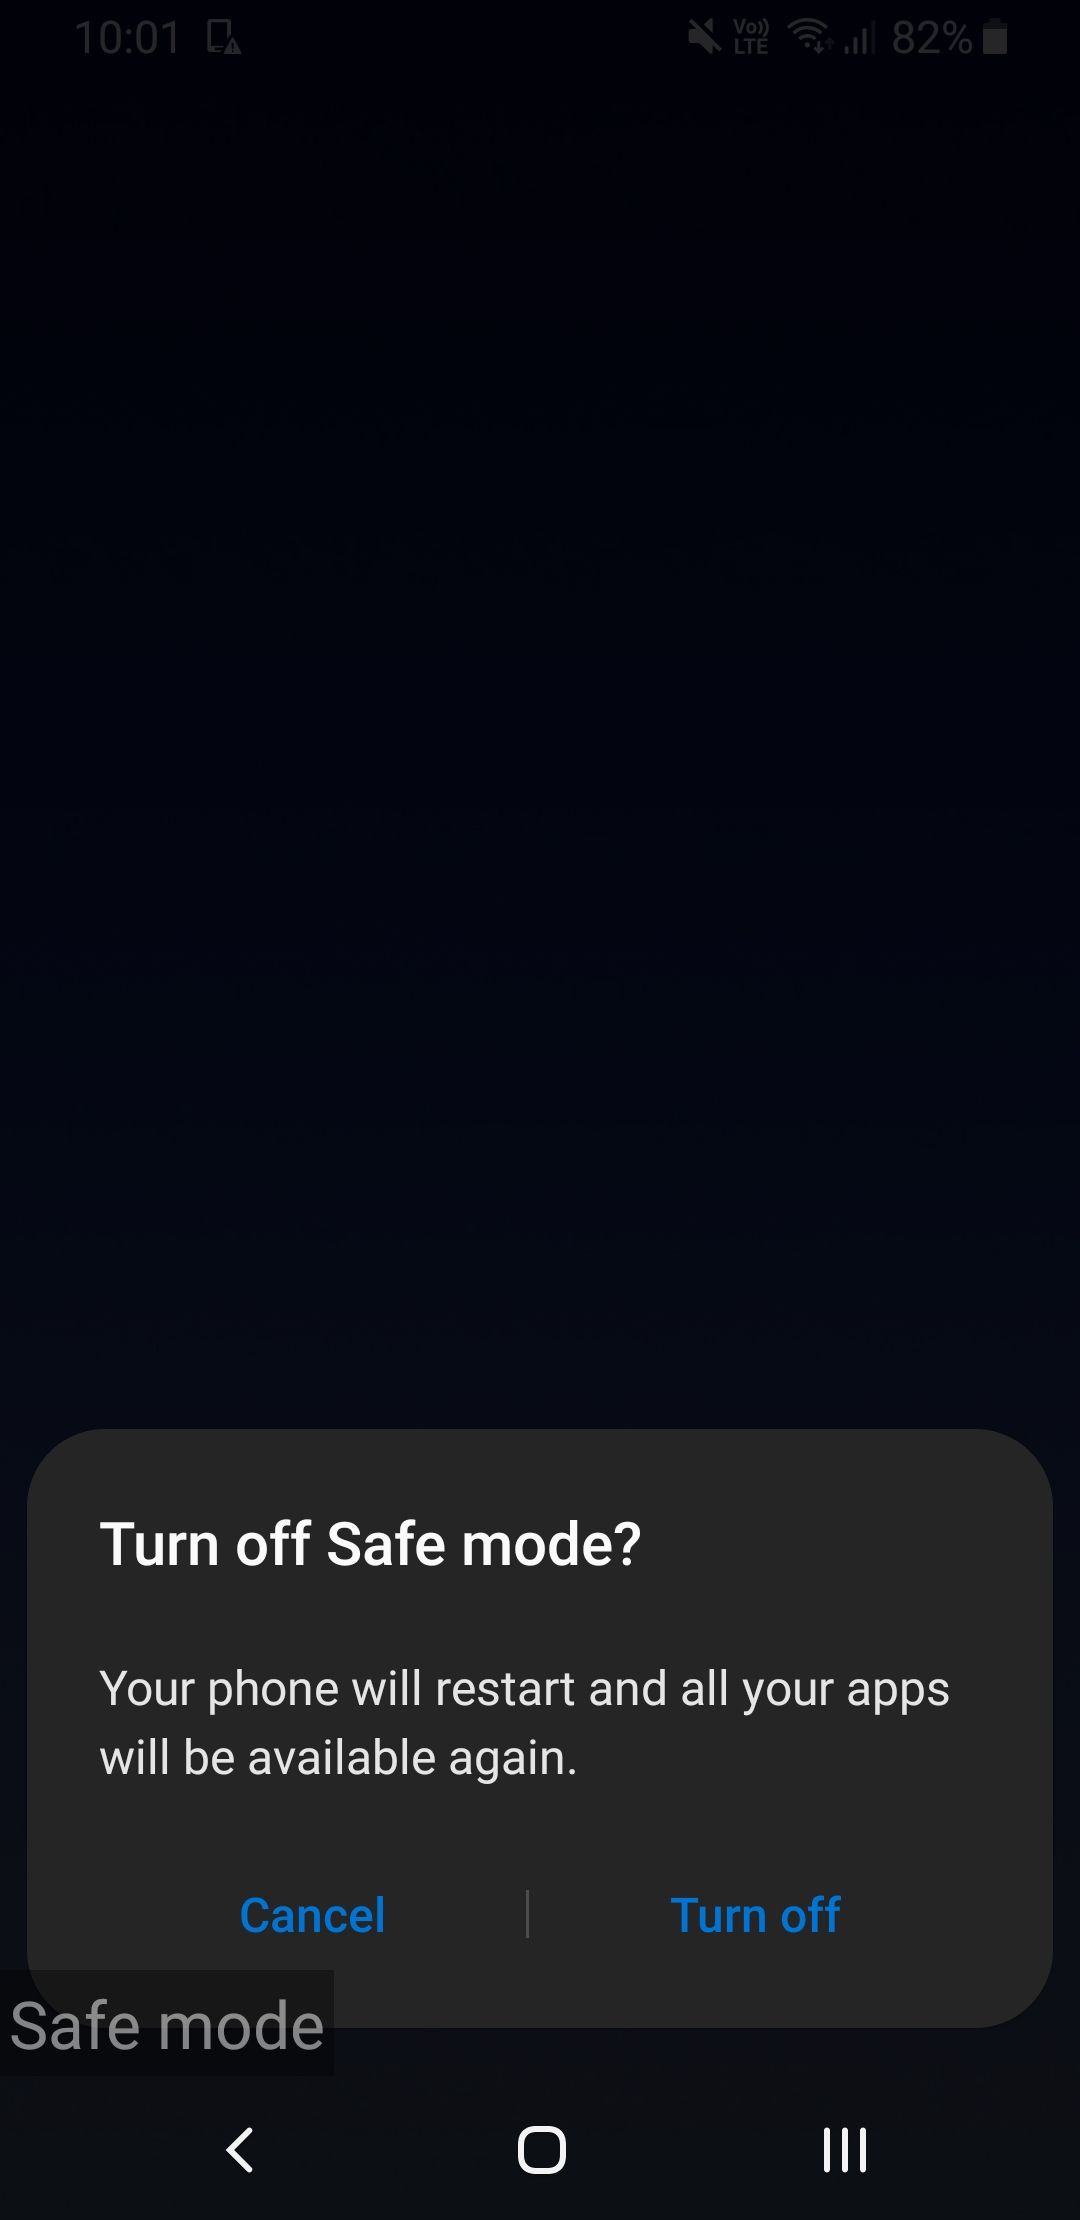 turn off safe mode confirmation on samsung phone